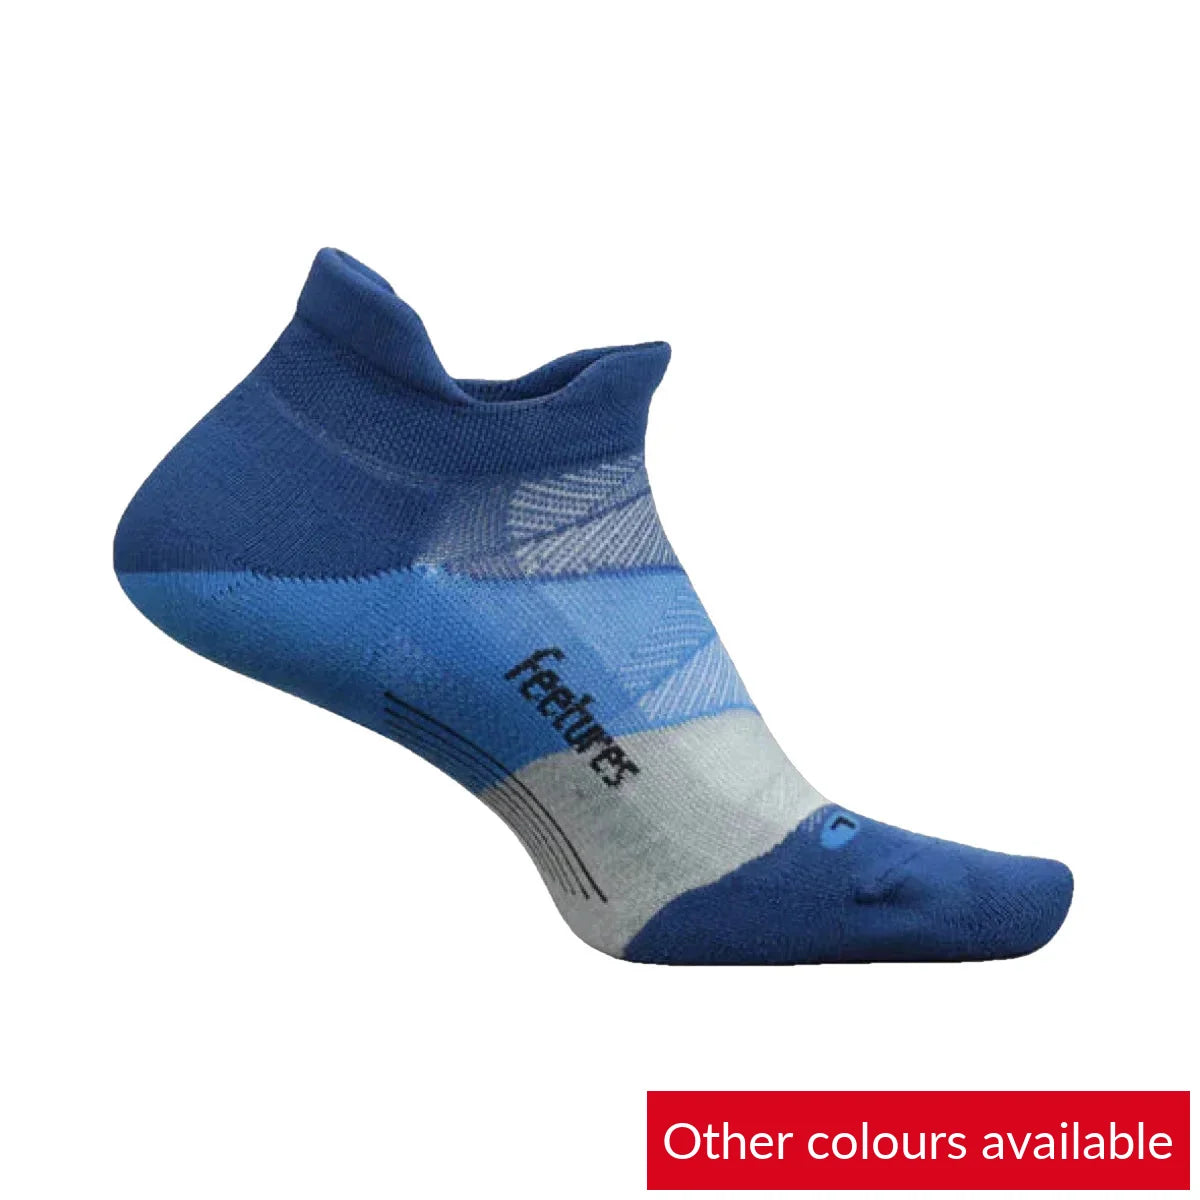 Unisex Feetures Elite Ultra Light No Show Socks